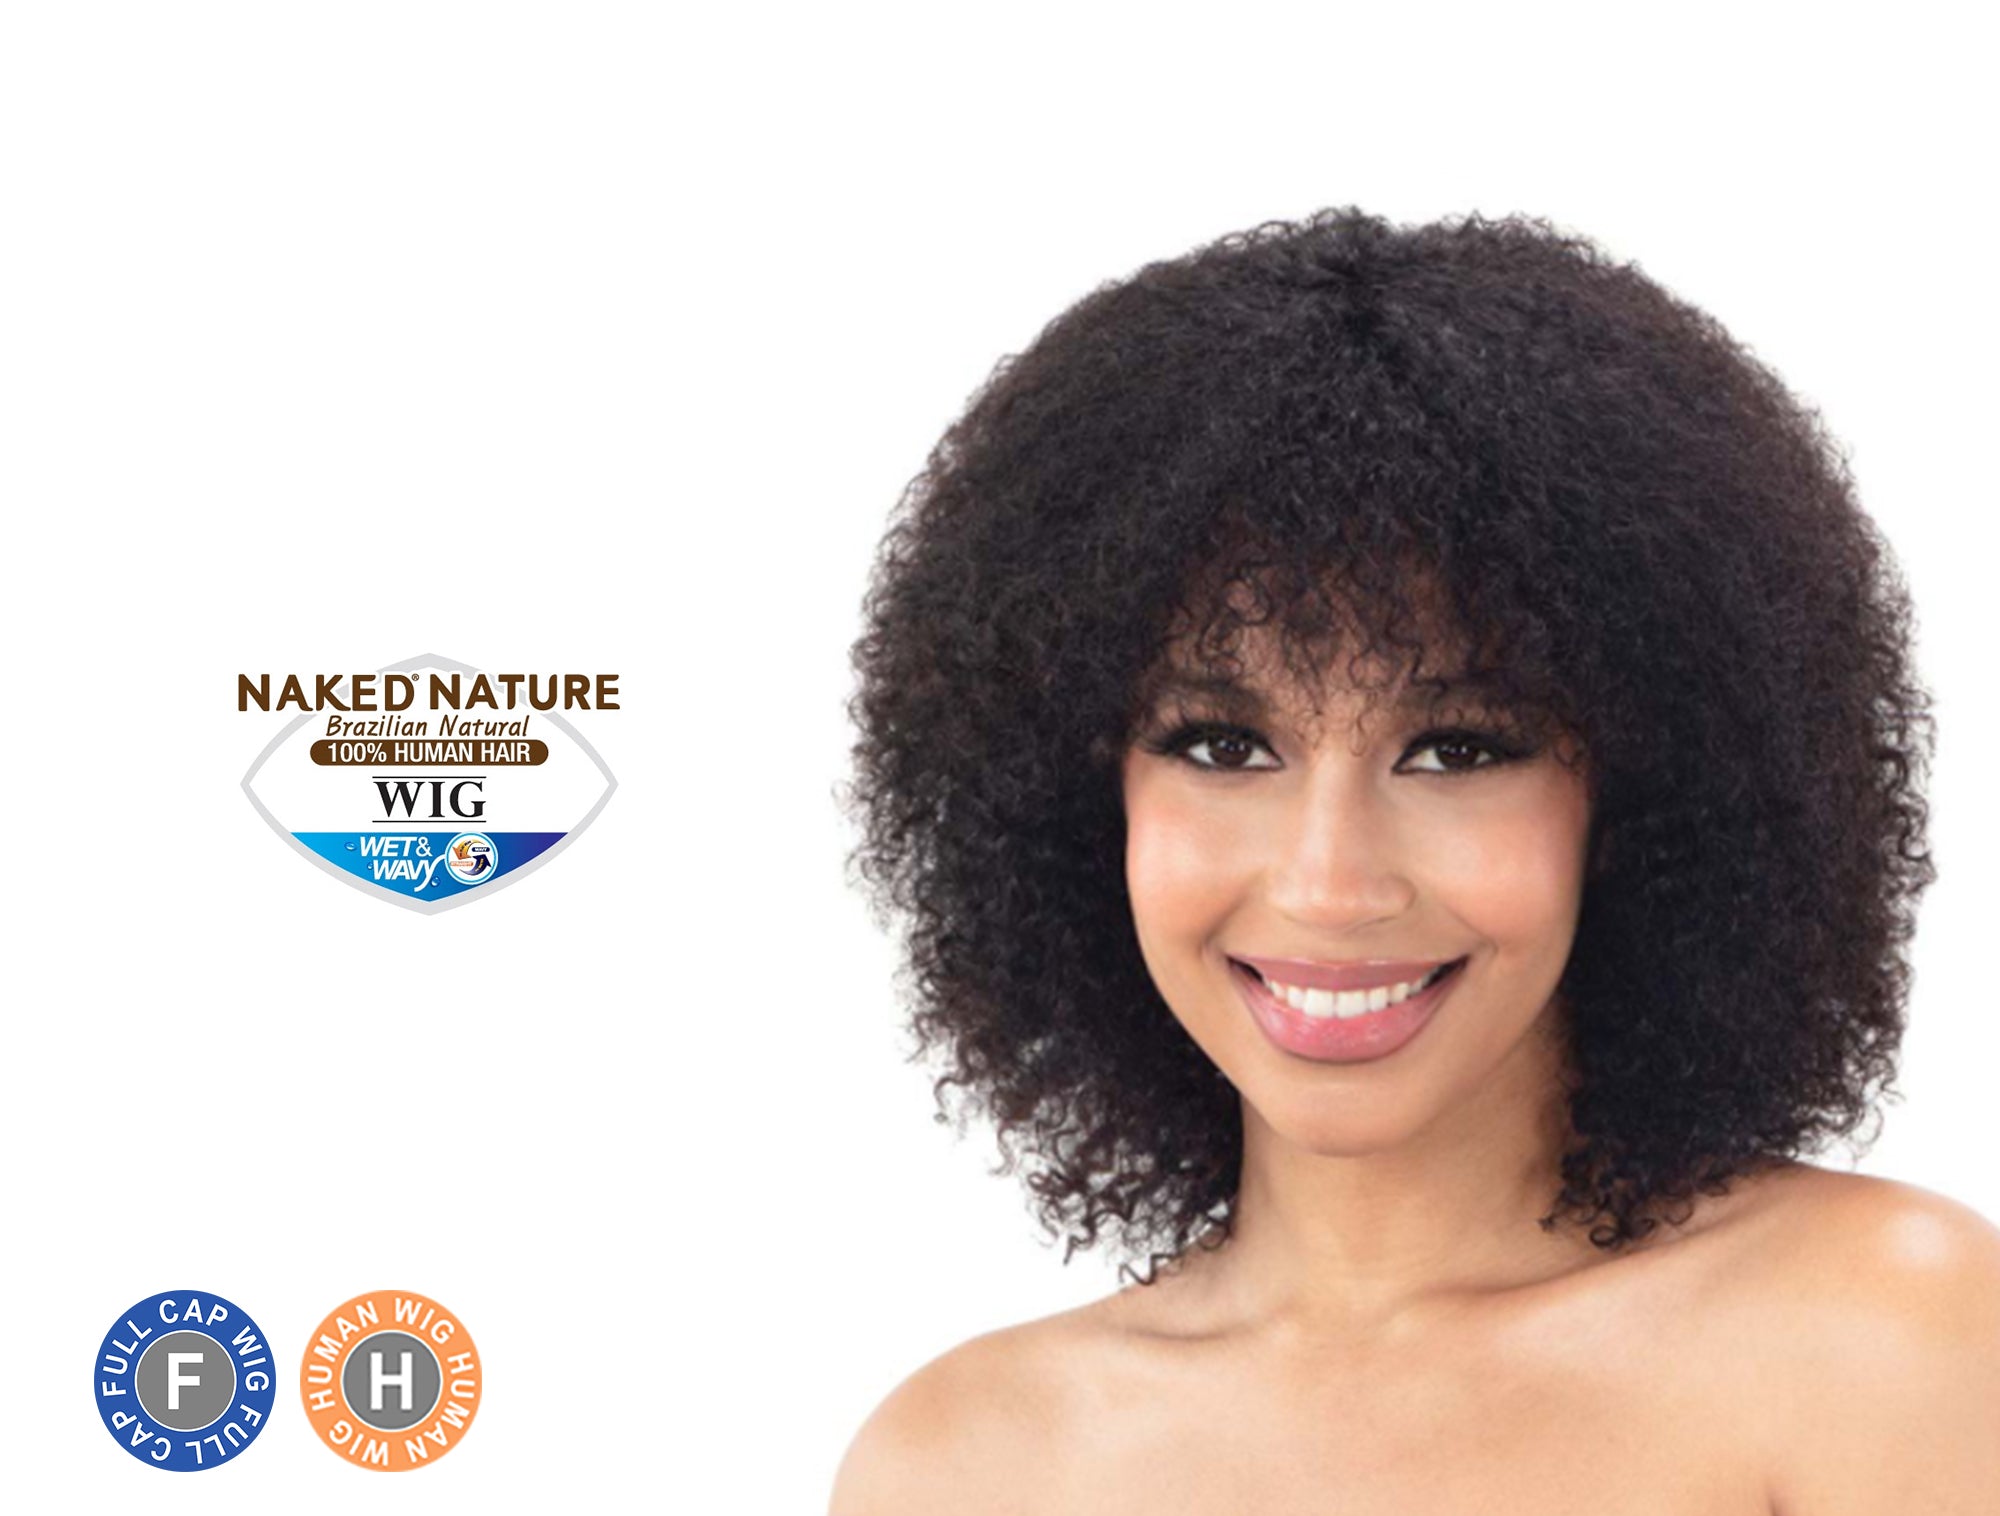 Brazilian Natural Blonde Hair Wigs - wide 5